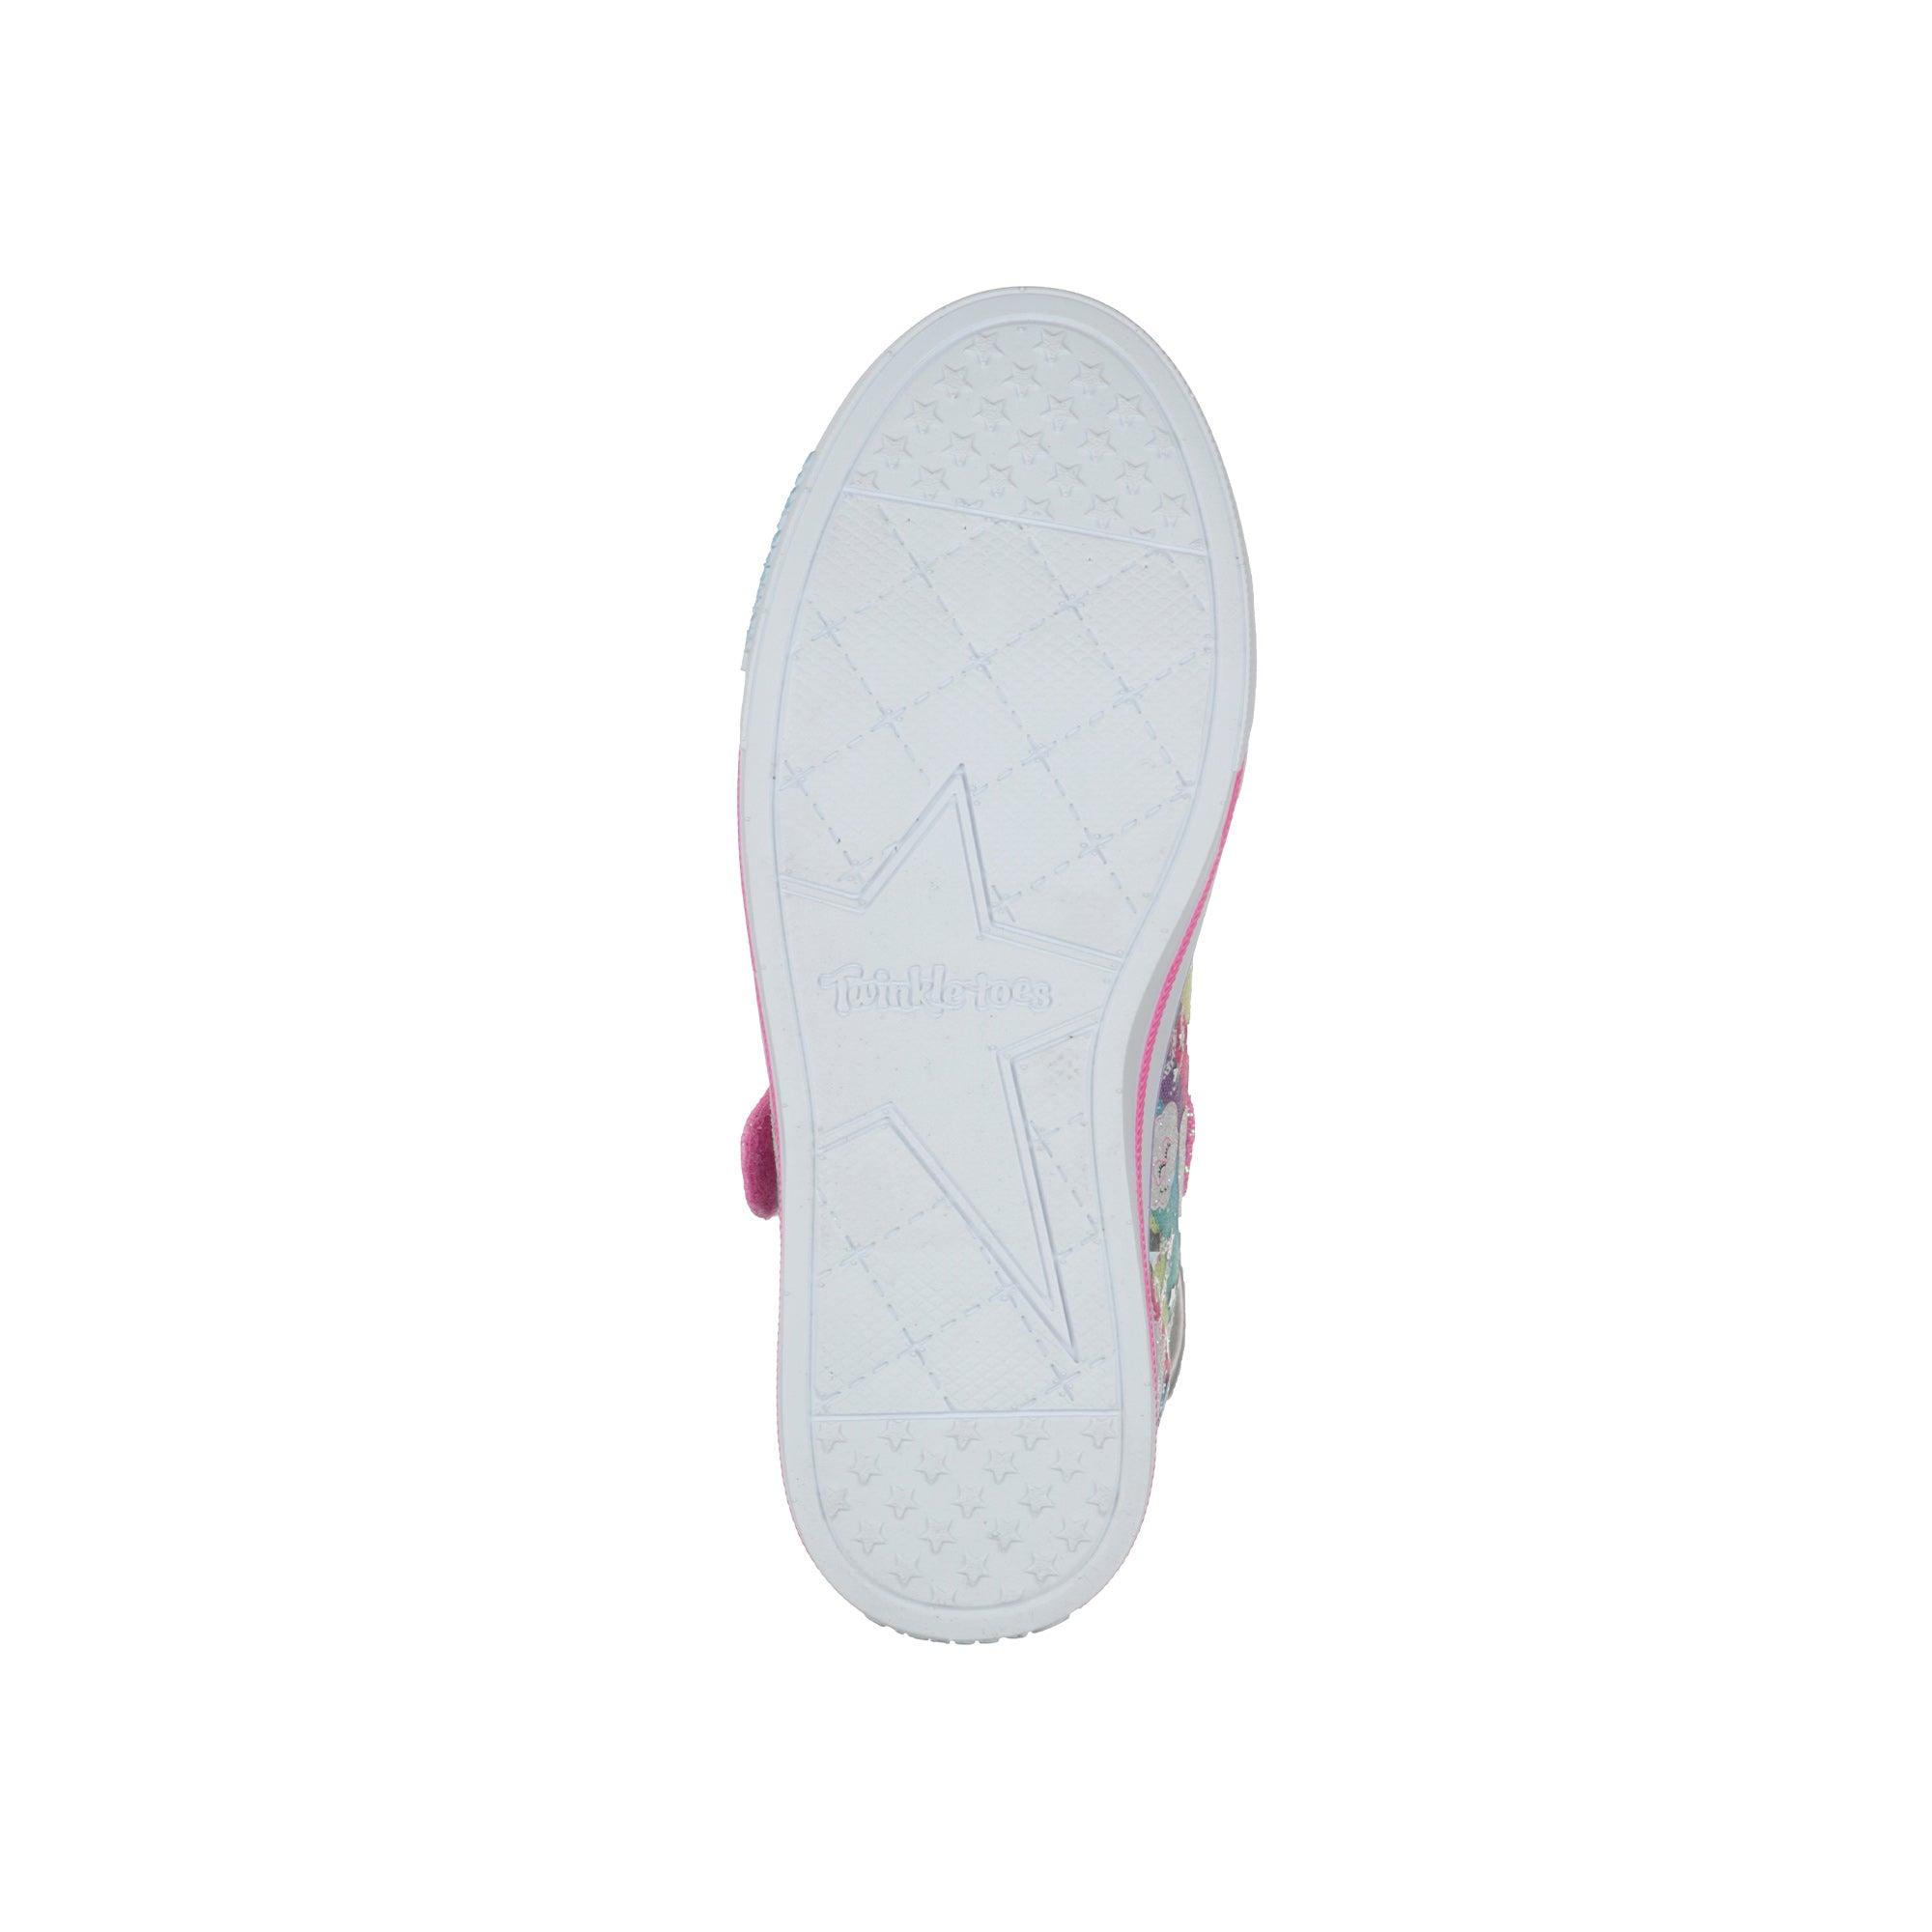 Giày sneaker bé gái Skechers Sparkle Lite - Rainbow Sparks - 314759L